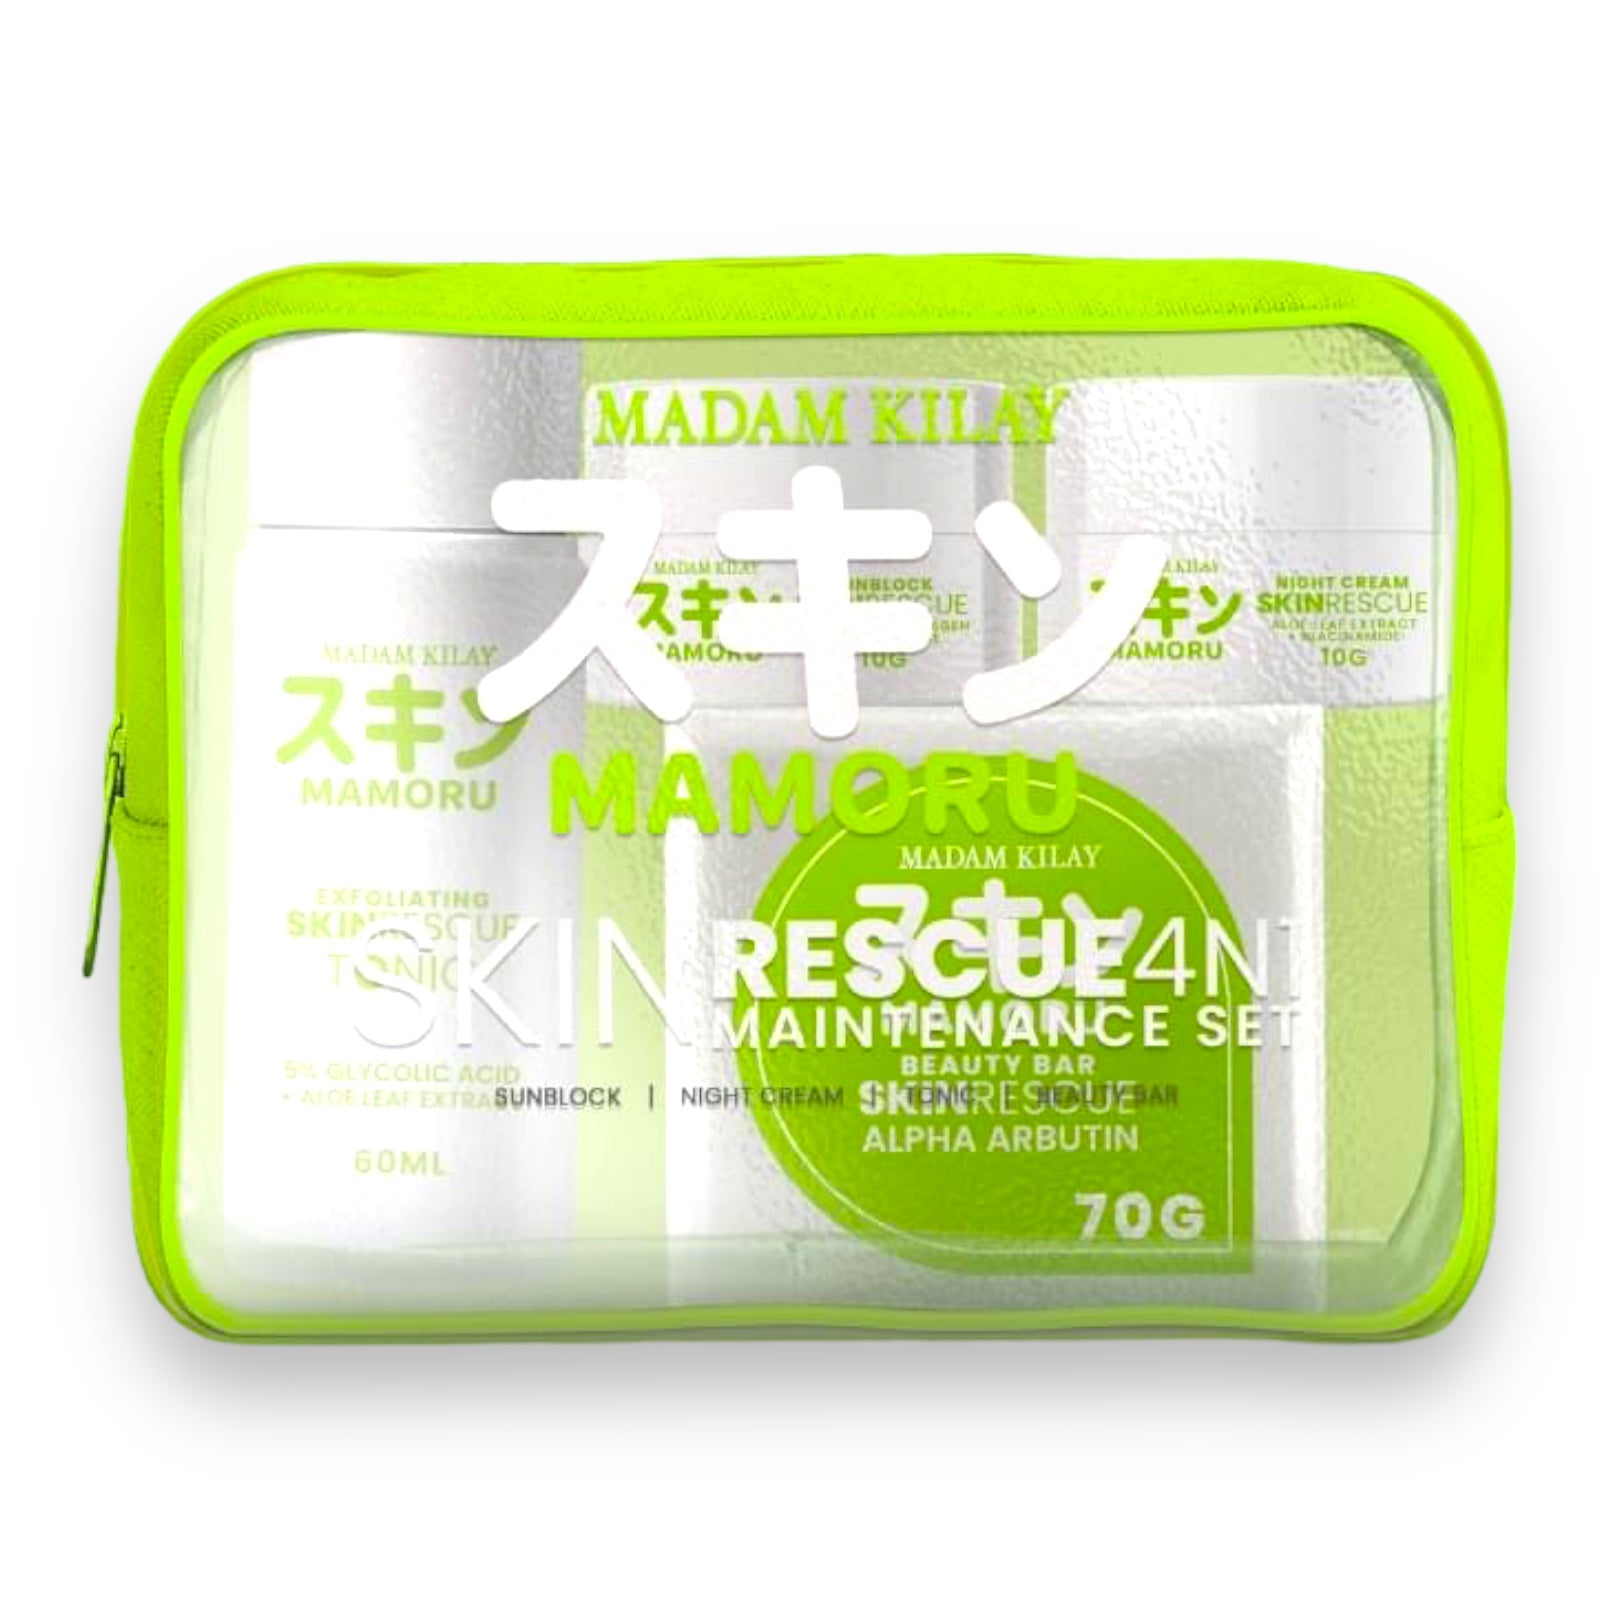 Madam Kilay - Mamoru Skin Rescue 4 in 1 - Maintenance Set